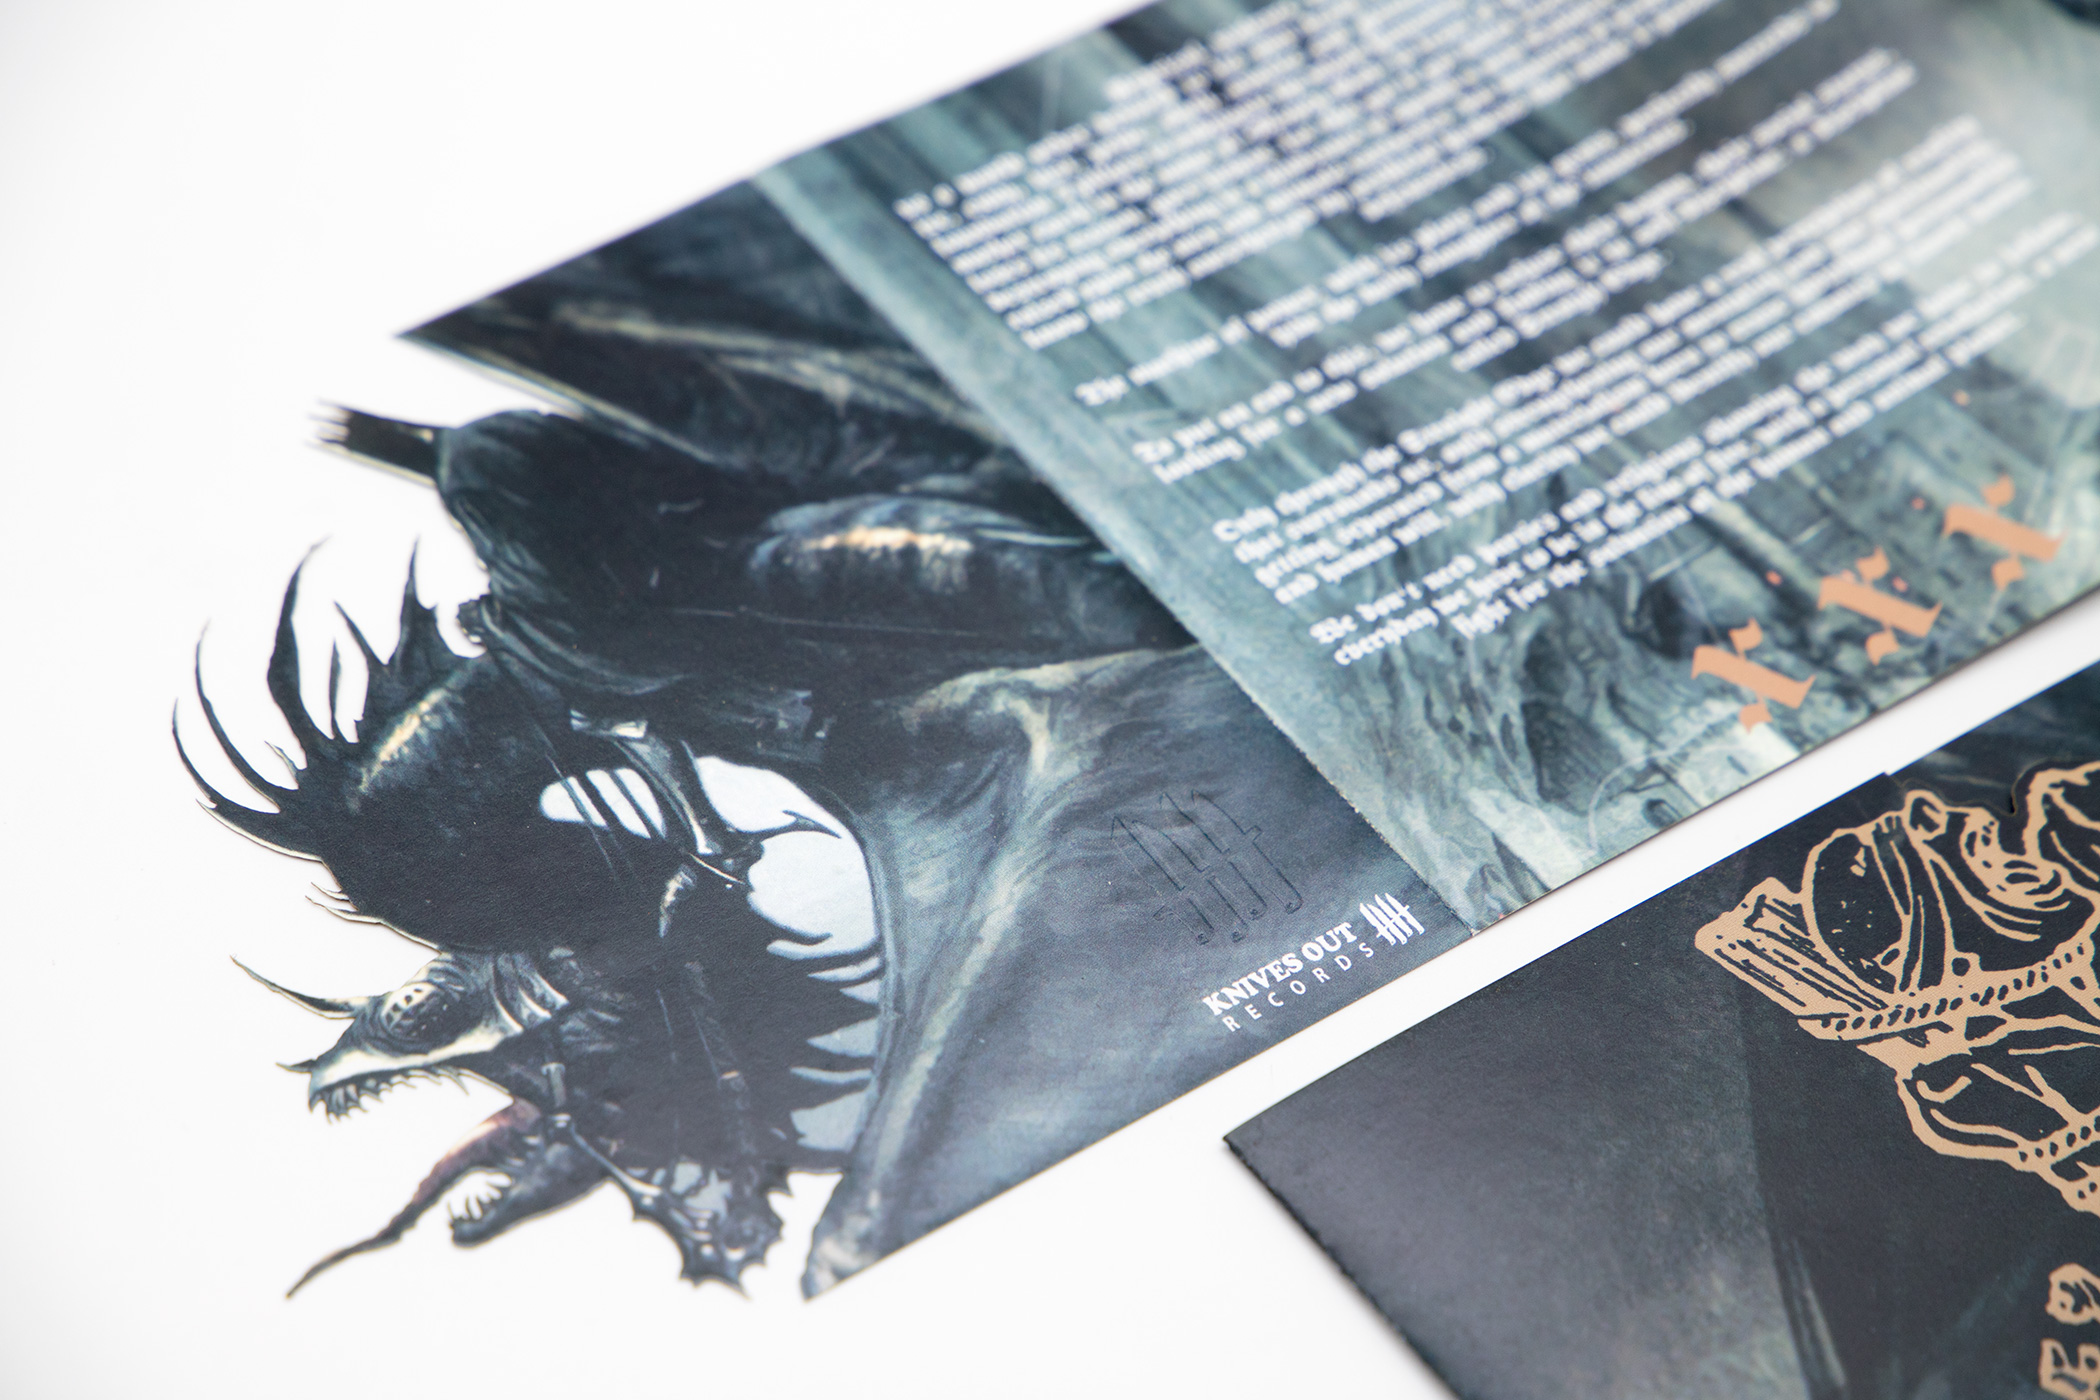 REPRISAL "Where Heavy Gloom Dominate" Die-cut Digipack Enhanced CD